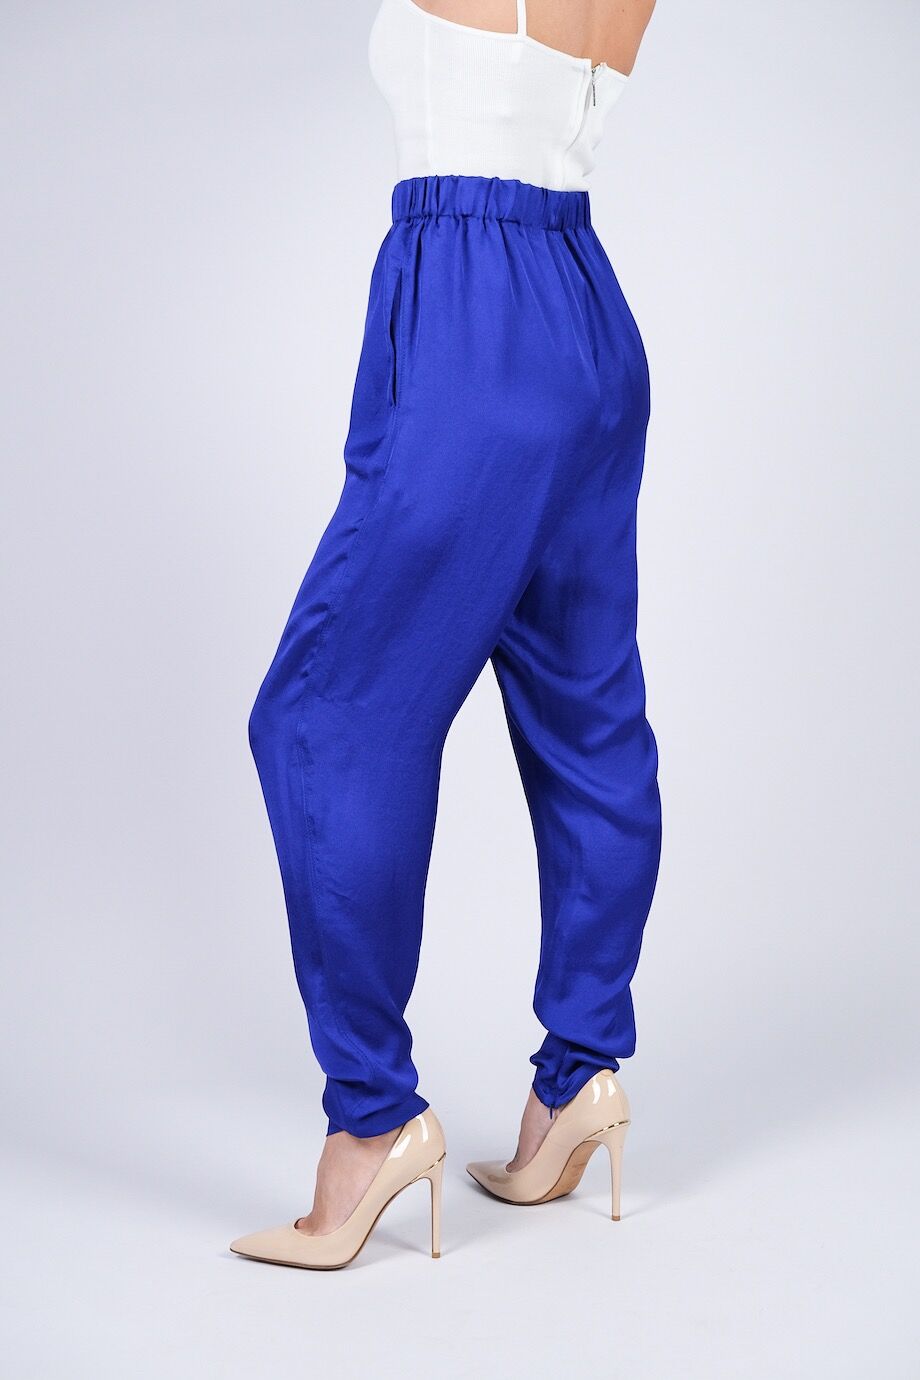 image 4 Атласные брюки синего цвета на резинке